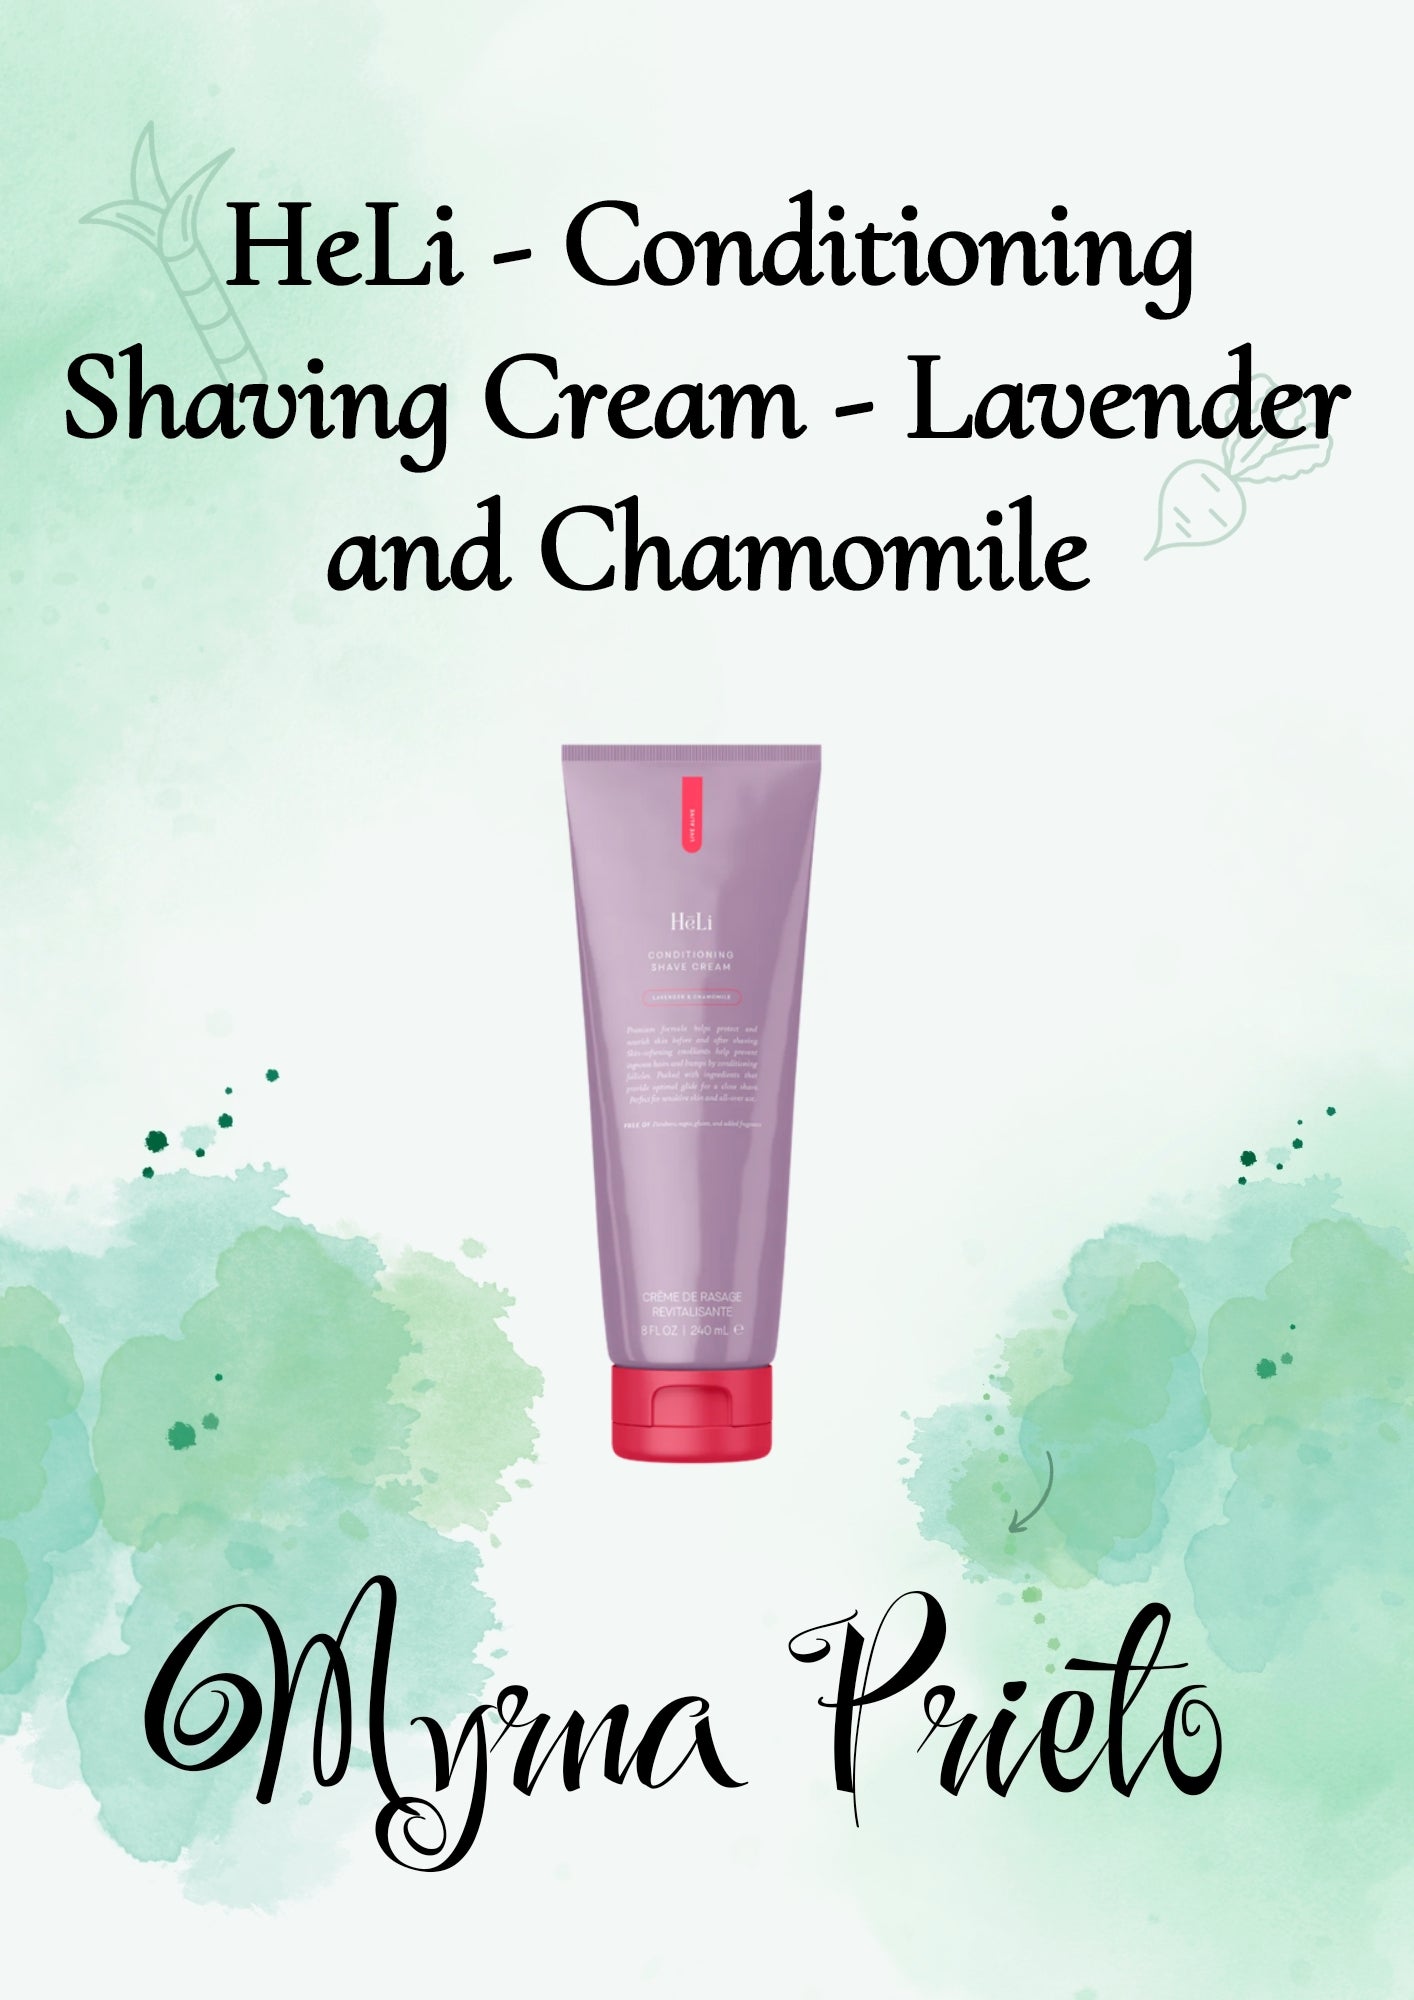 HeLi - Conditioning Shaving Cream - Lavender and Chamomile